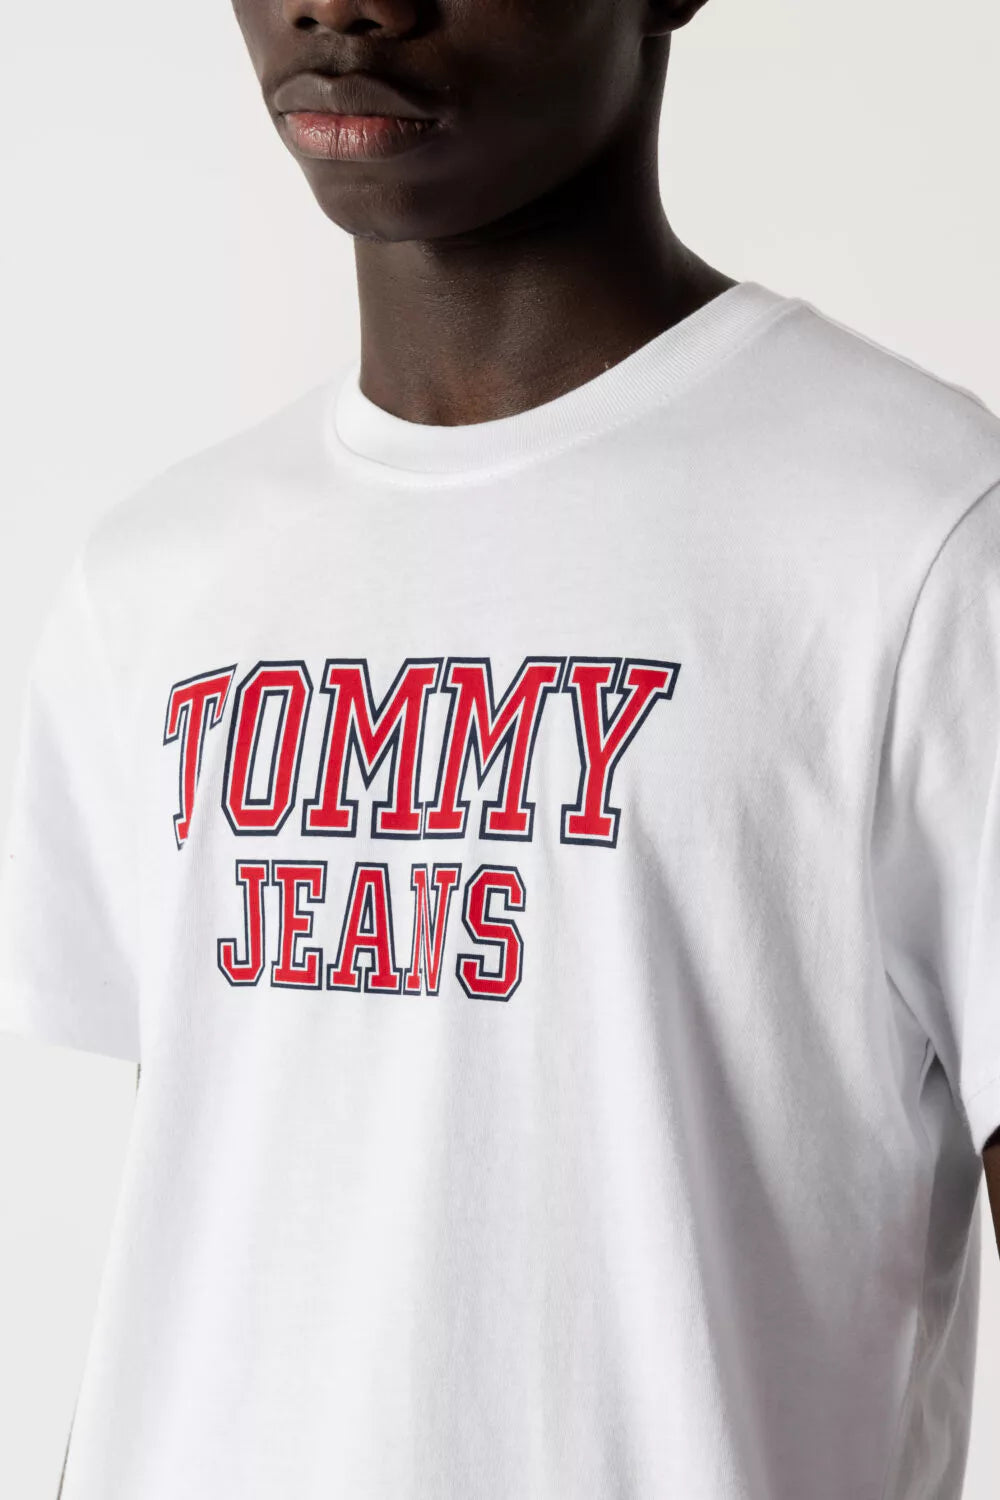 TOMMY HILFIGER camiseta blanca